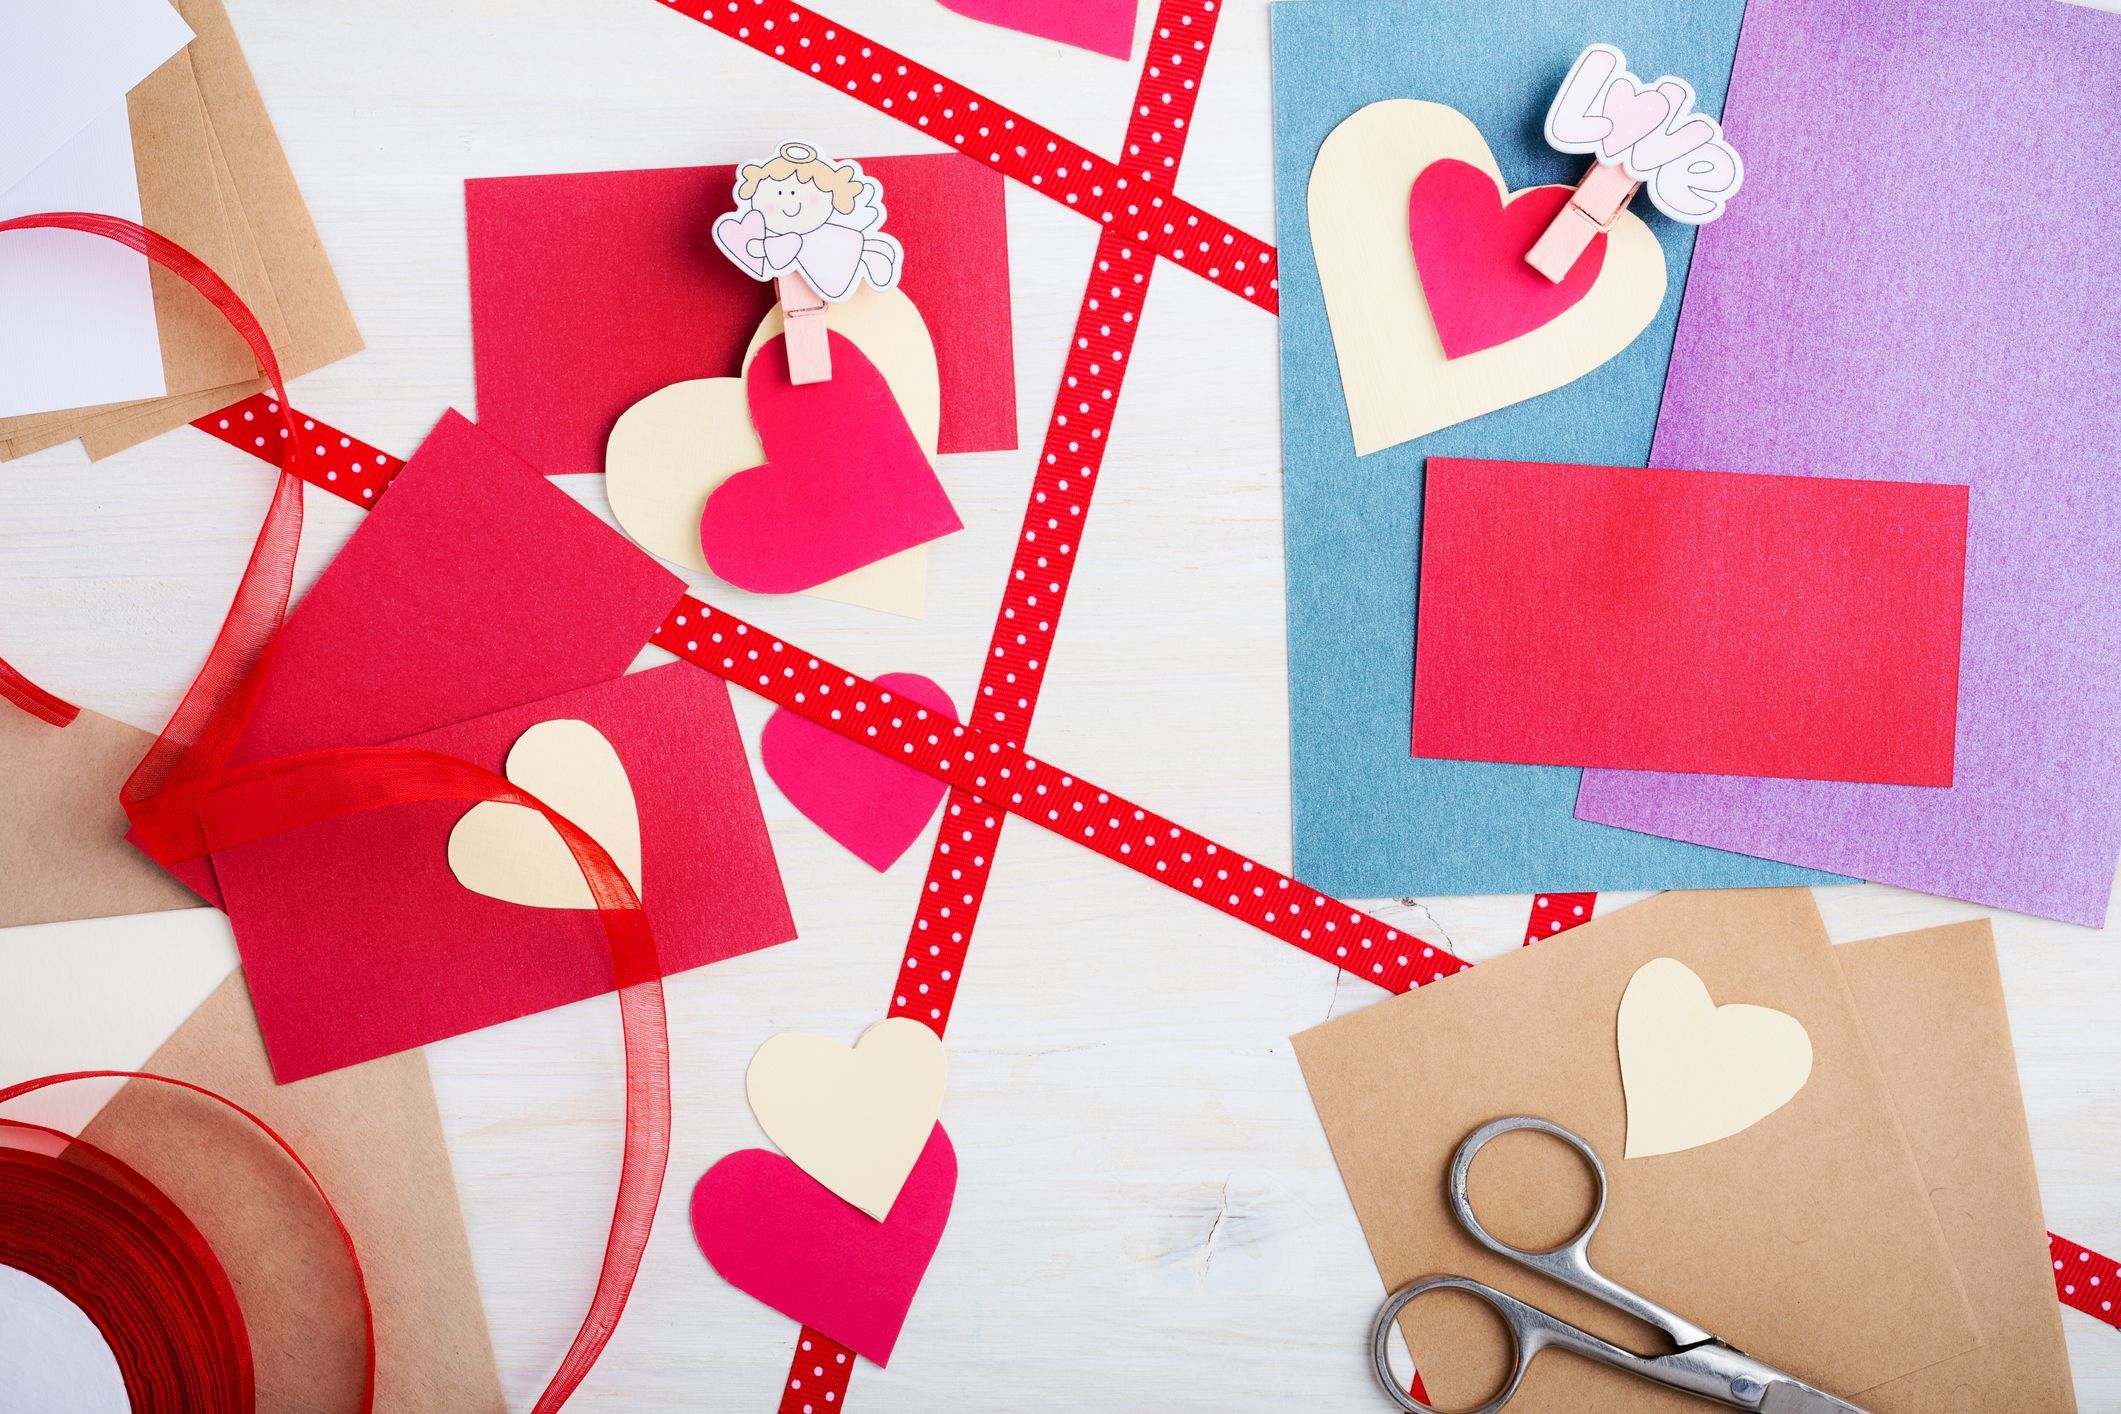 Creating Valentine's day D.I.Y. crafts